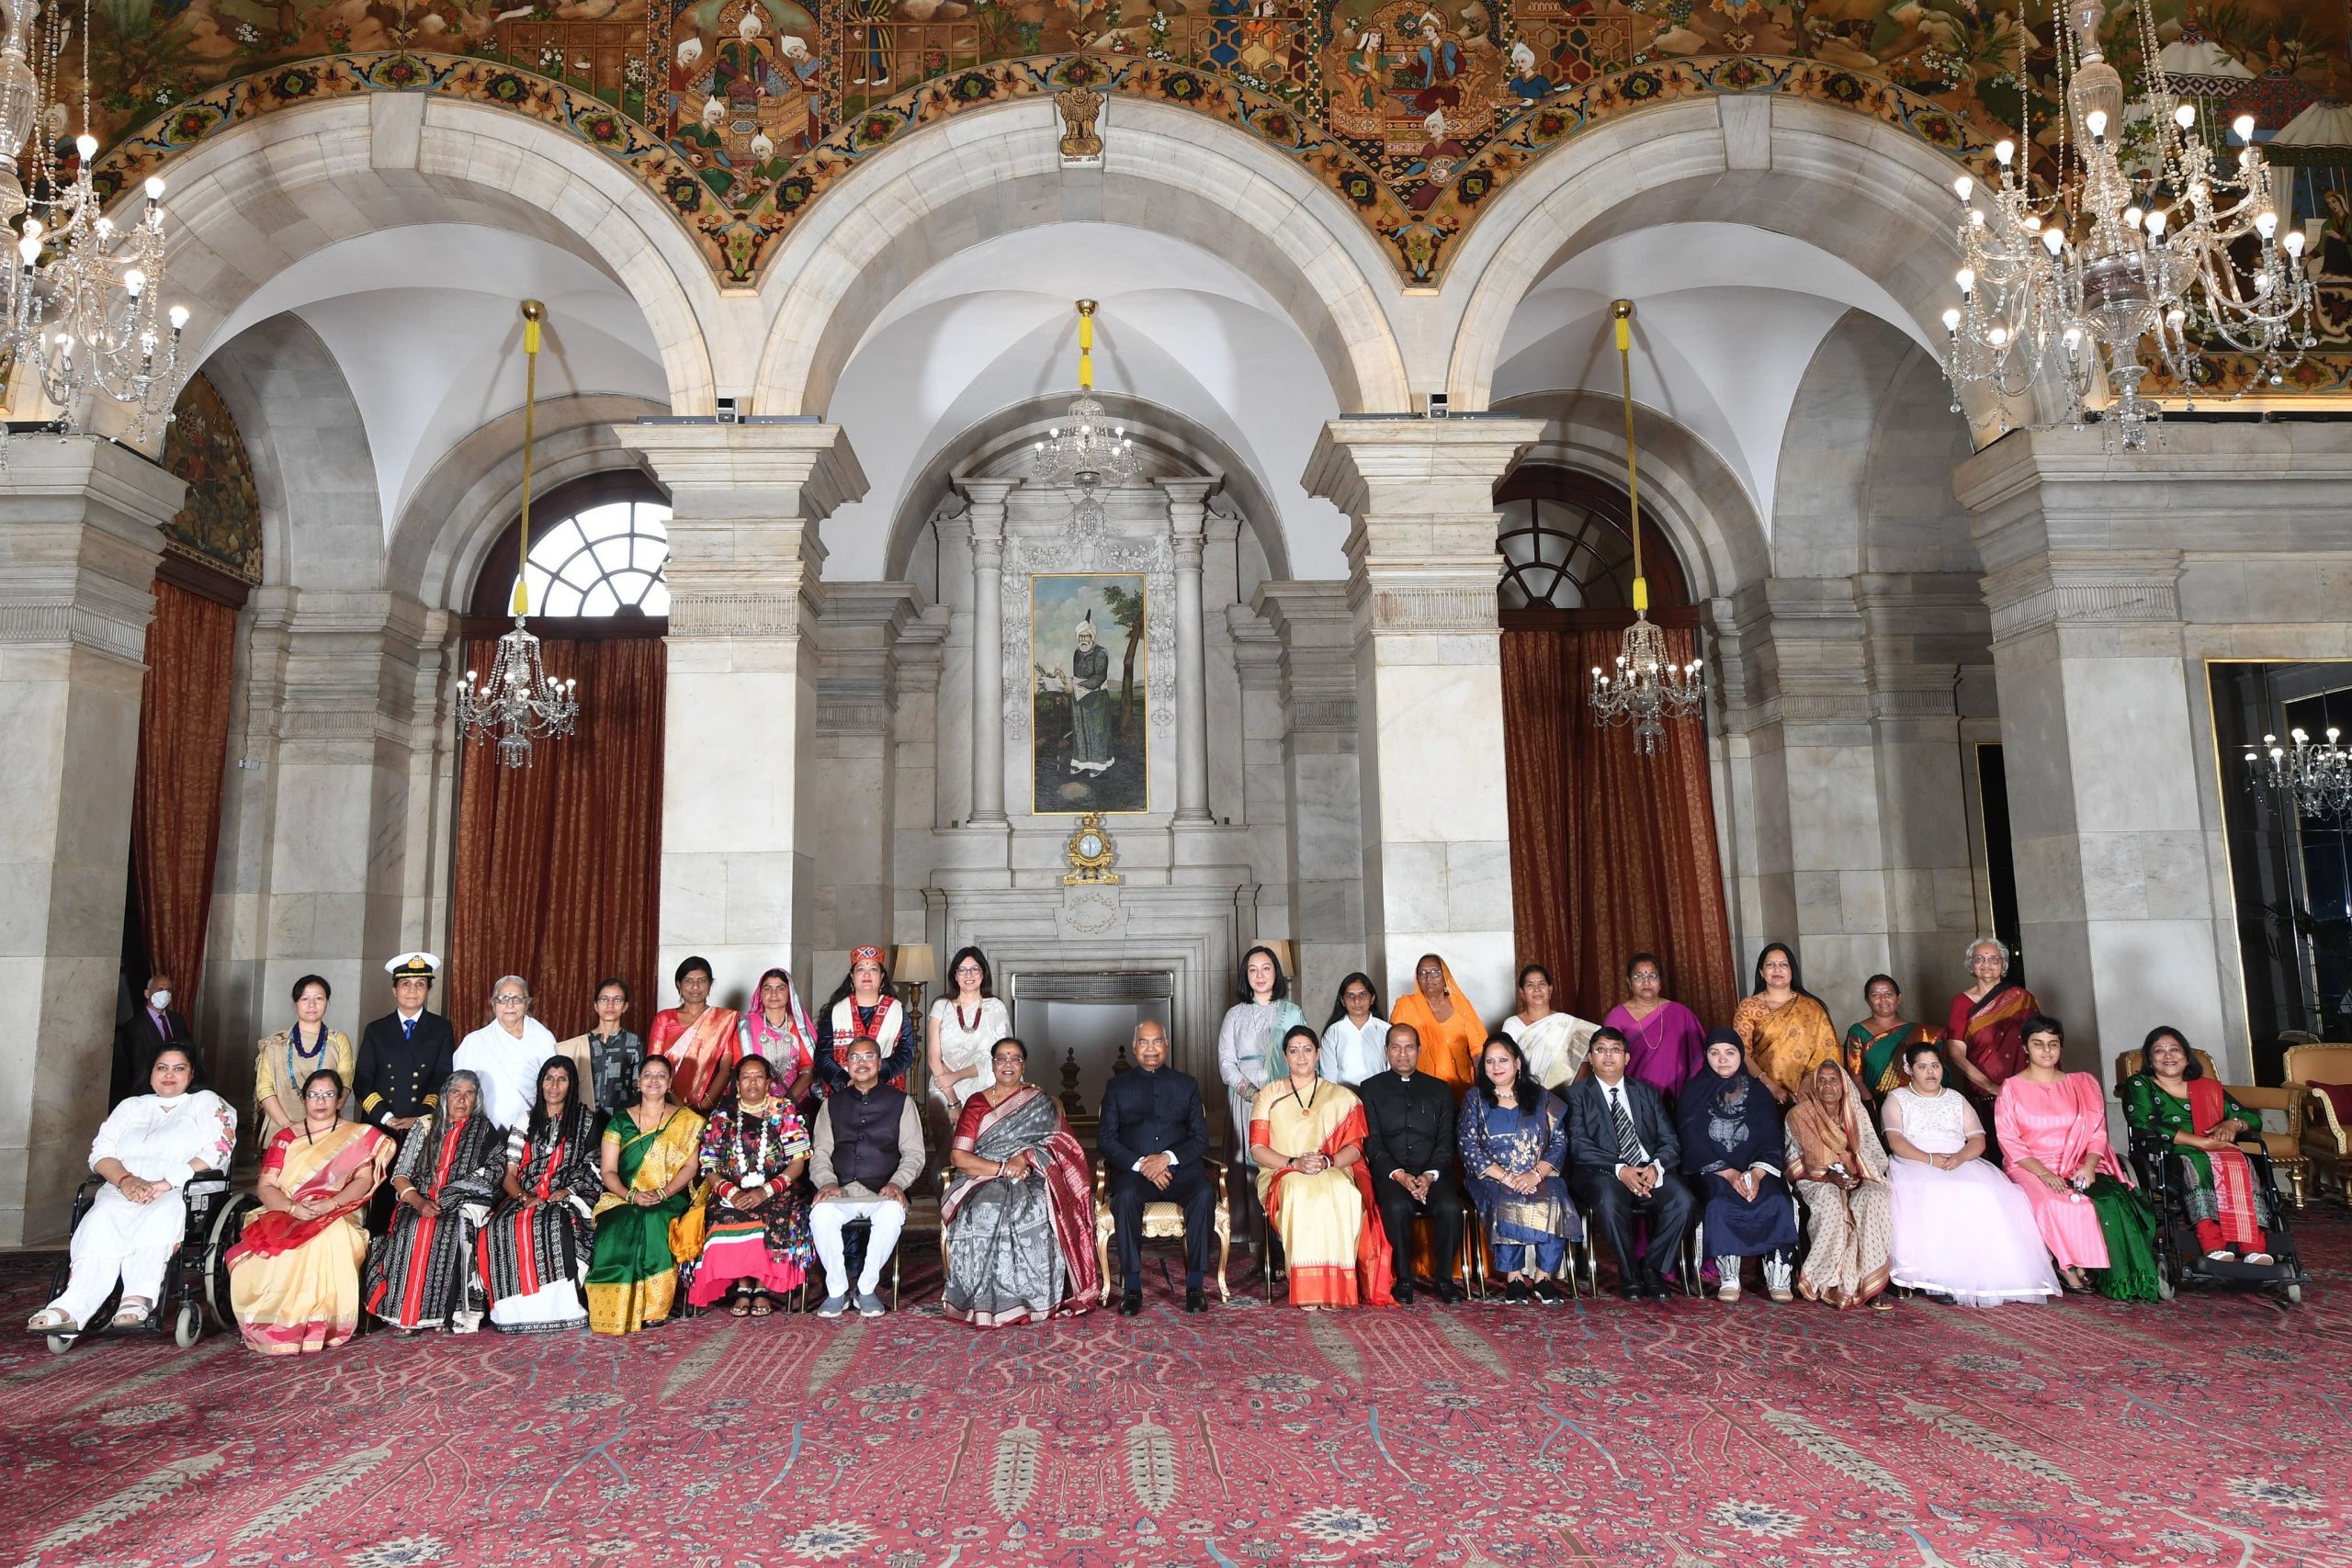 अंतरराष्ट्रीय महिला दिवस पर राष्ट्रपति कोविन्द ने 29 महिलाओं को प्रदान किए नारी शक्ति पुरस्कार